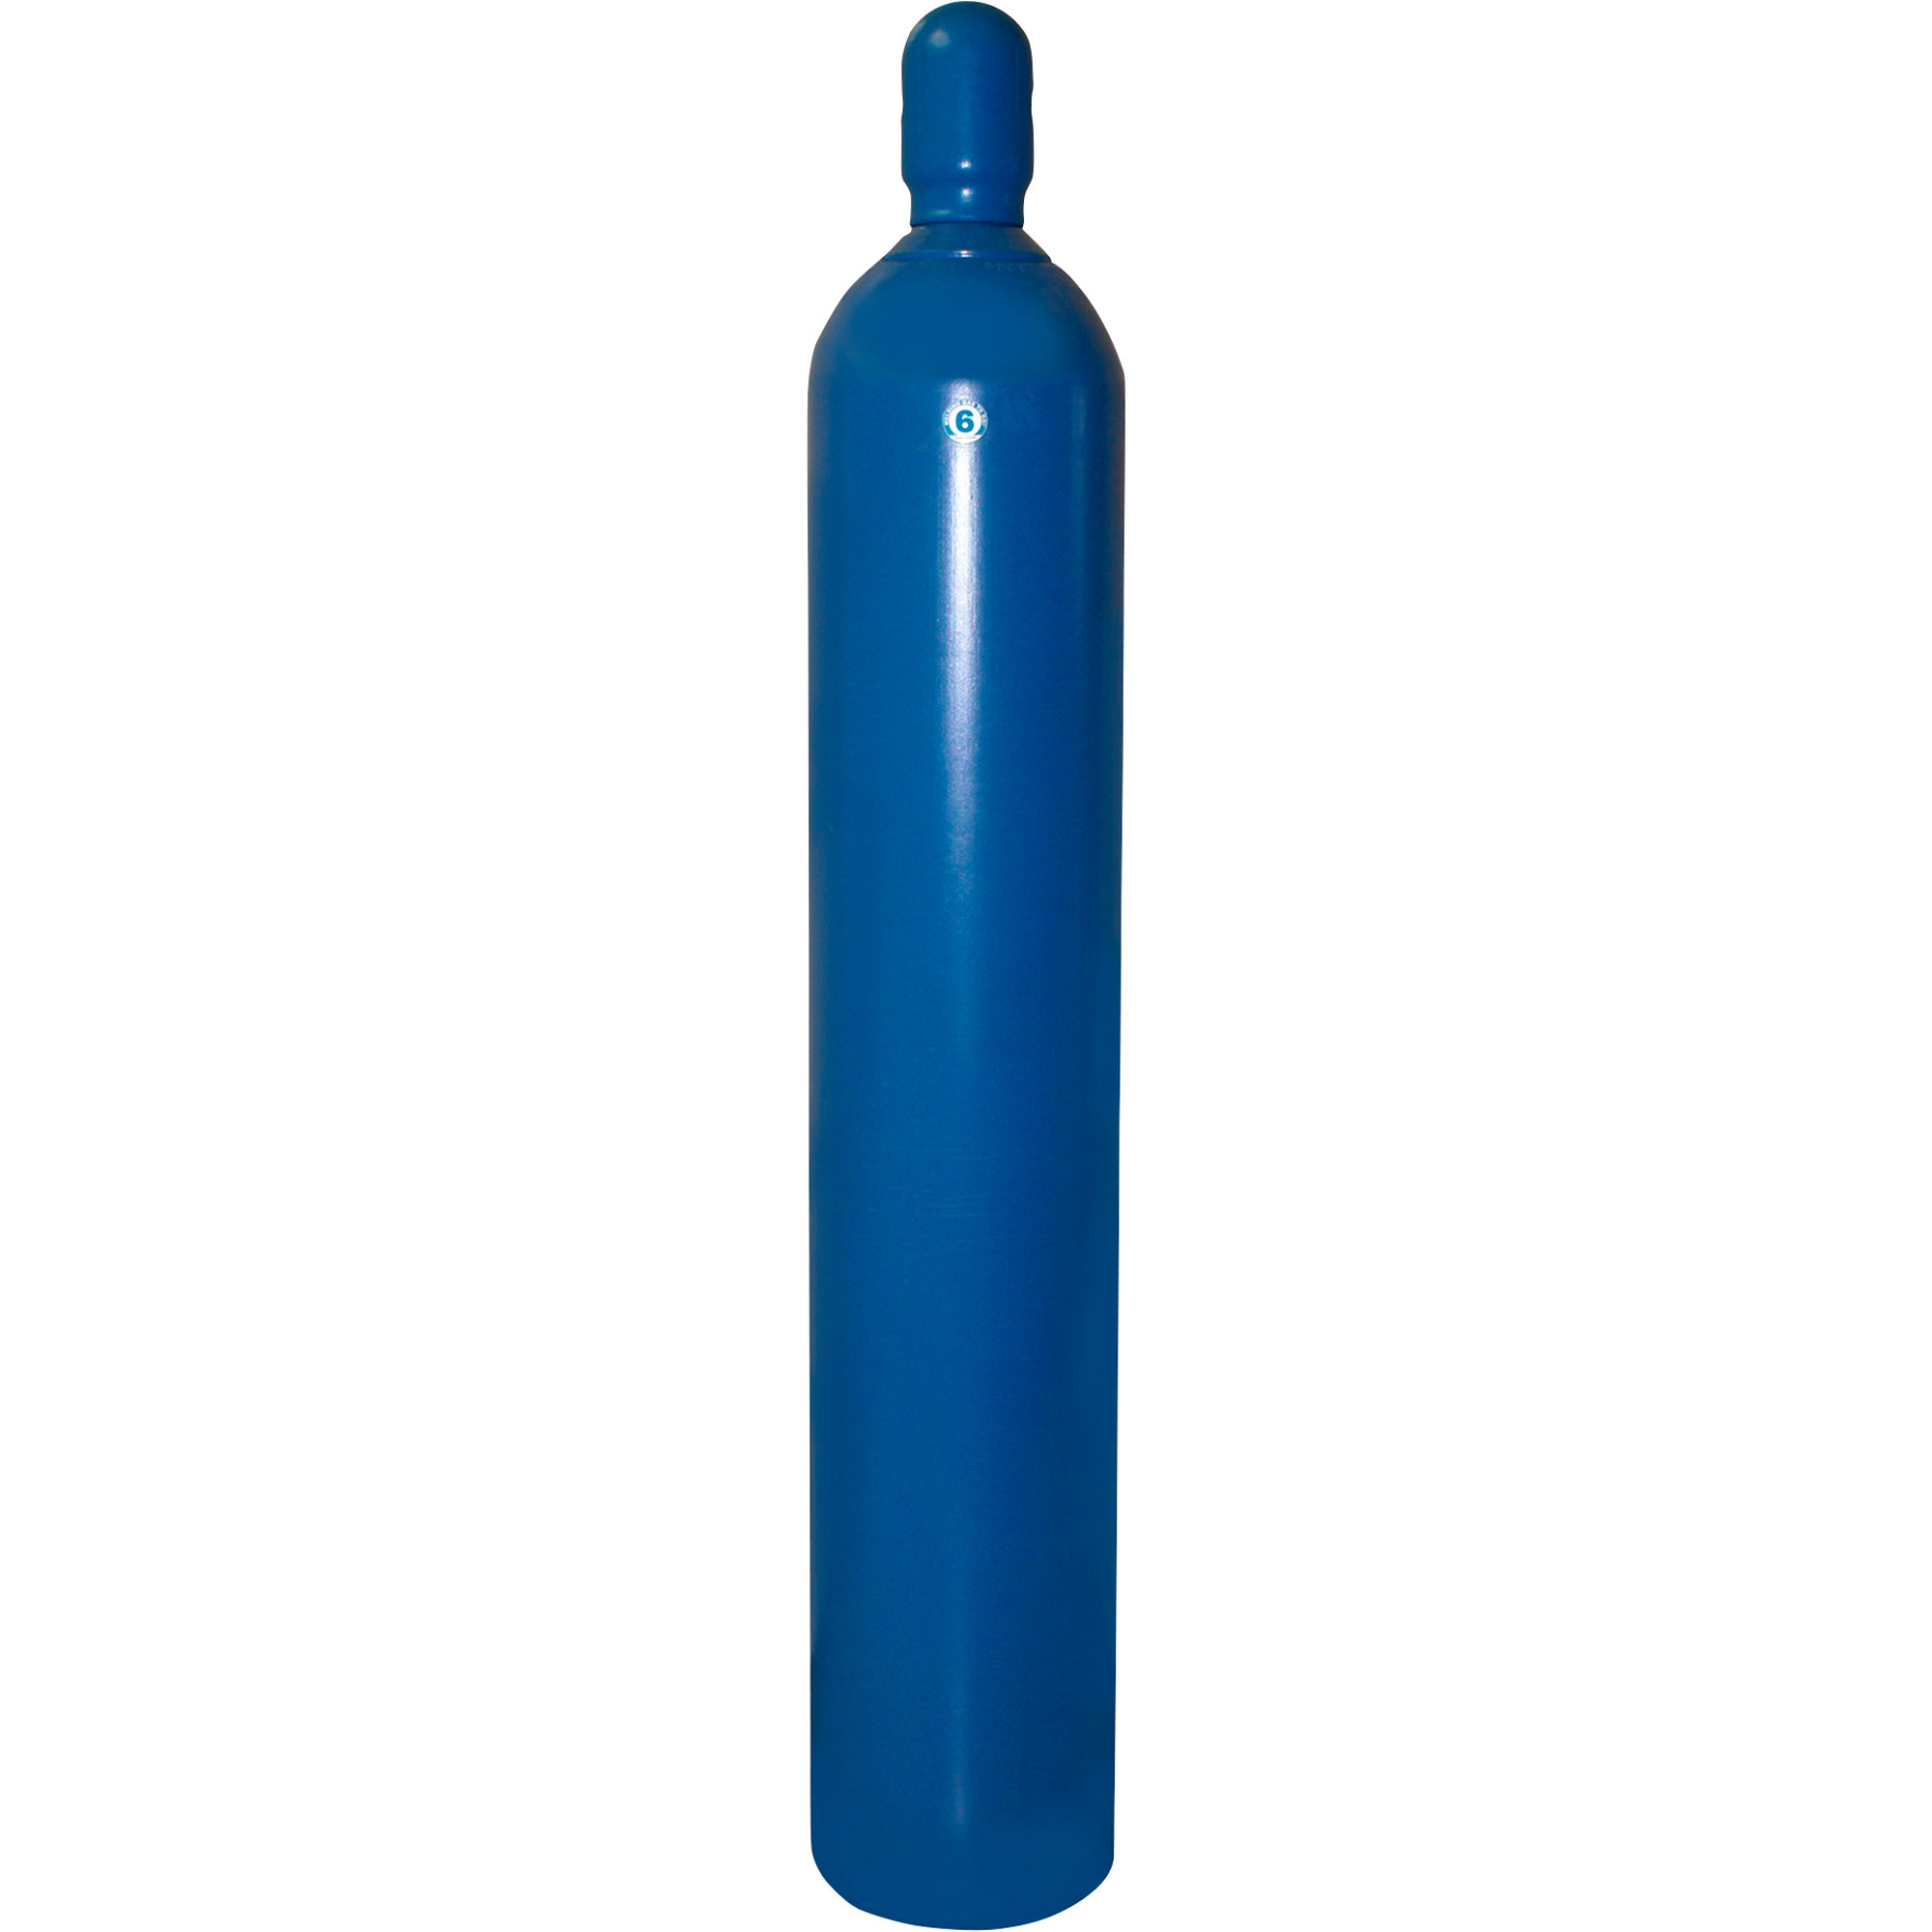 Thoroughbred 100% Argon Gas Cylinder â Size #6, 330CF